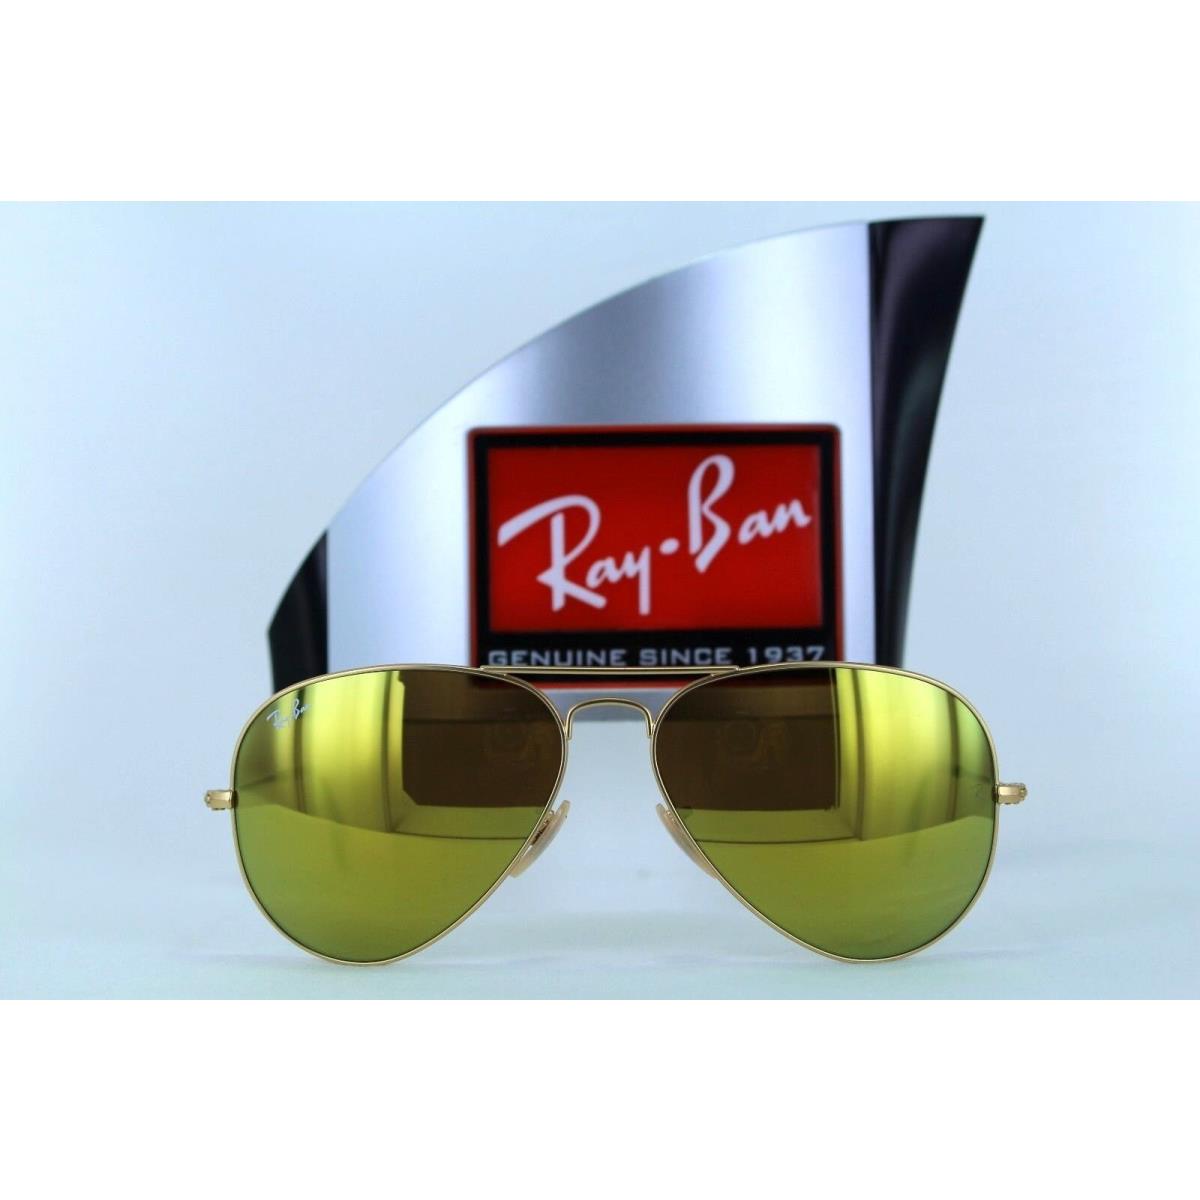 Ray-ban Aviator Metal RB3025 112/93 Gold Pilot Yellow Mirrored Flash Sunglasses - Frame: Gold, Lens: Yellow